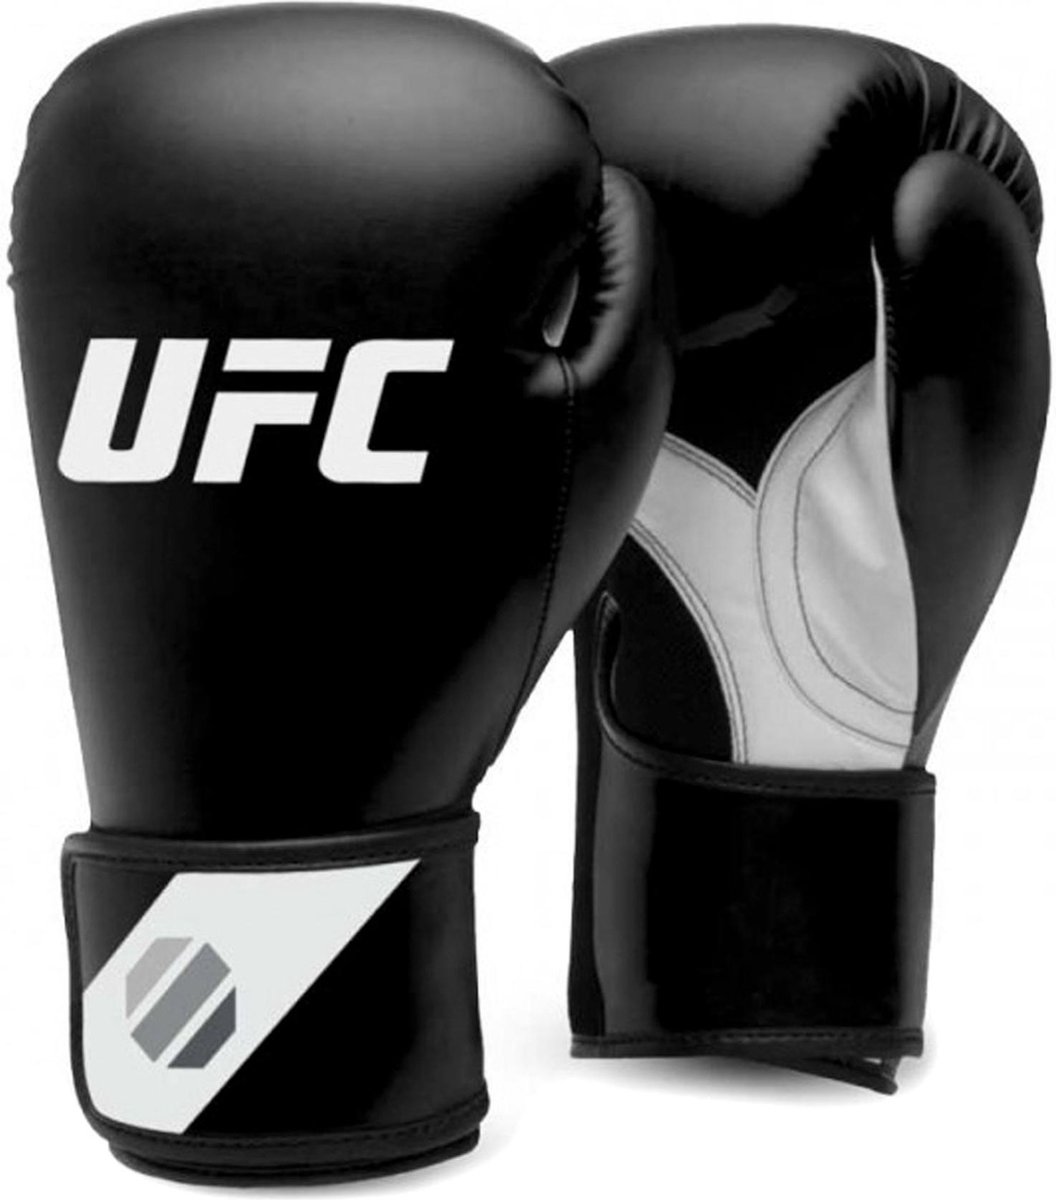 UFC - Training (kick)bokshandschoenen (16 oz - Zwart/Wit)